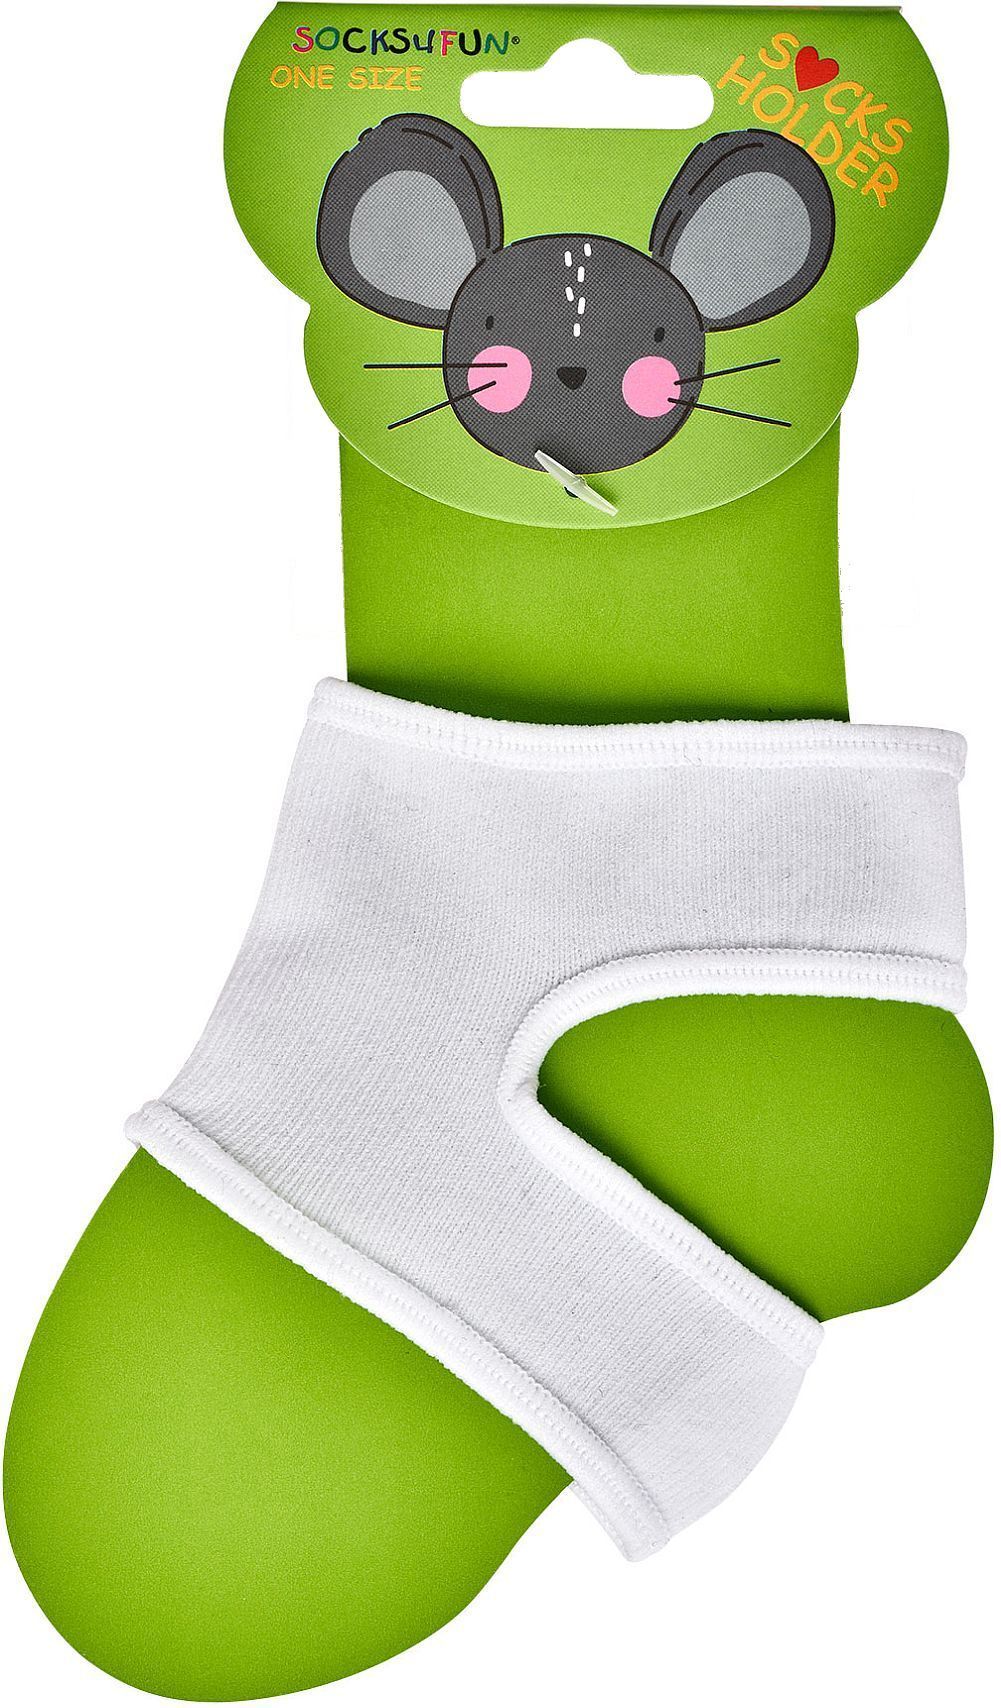 Baby Socken-Halter für Babys  3  Paar  